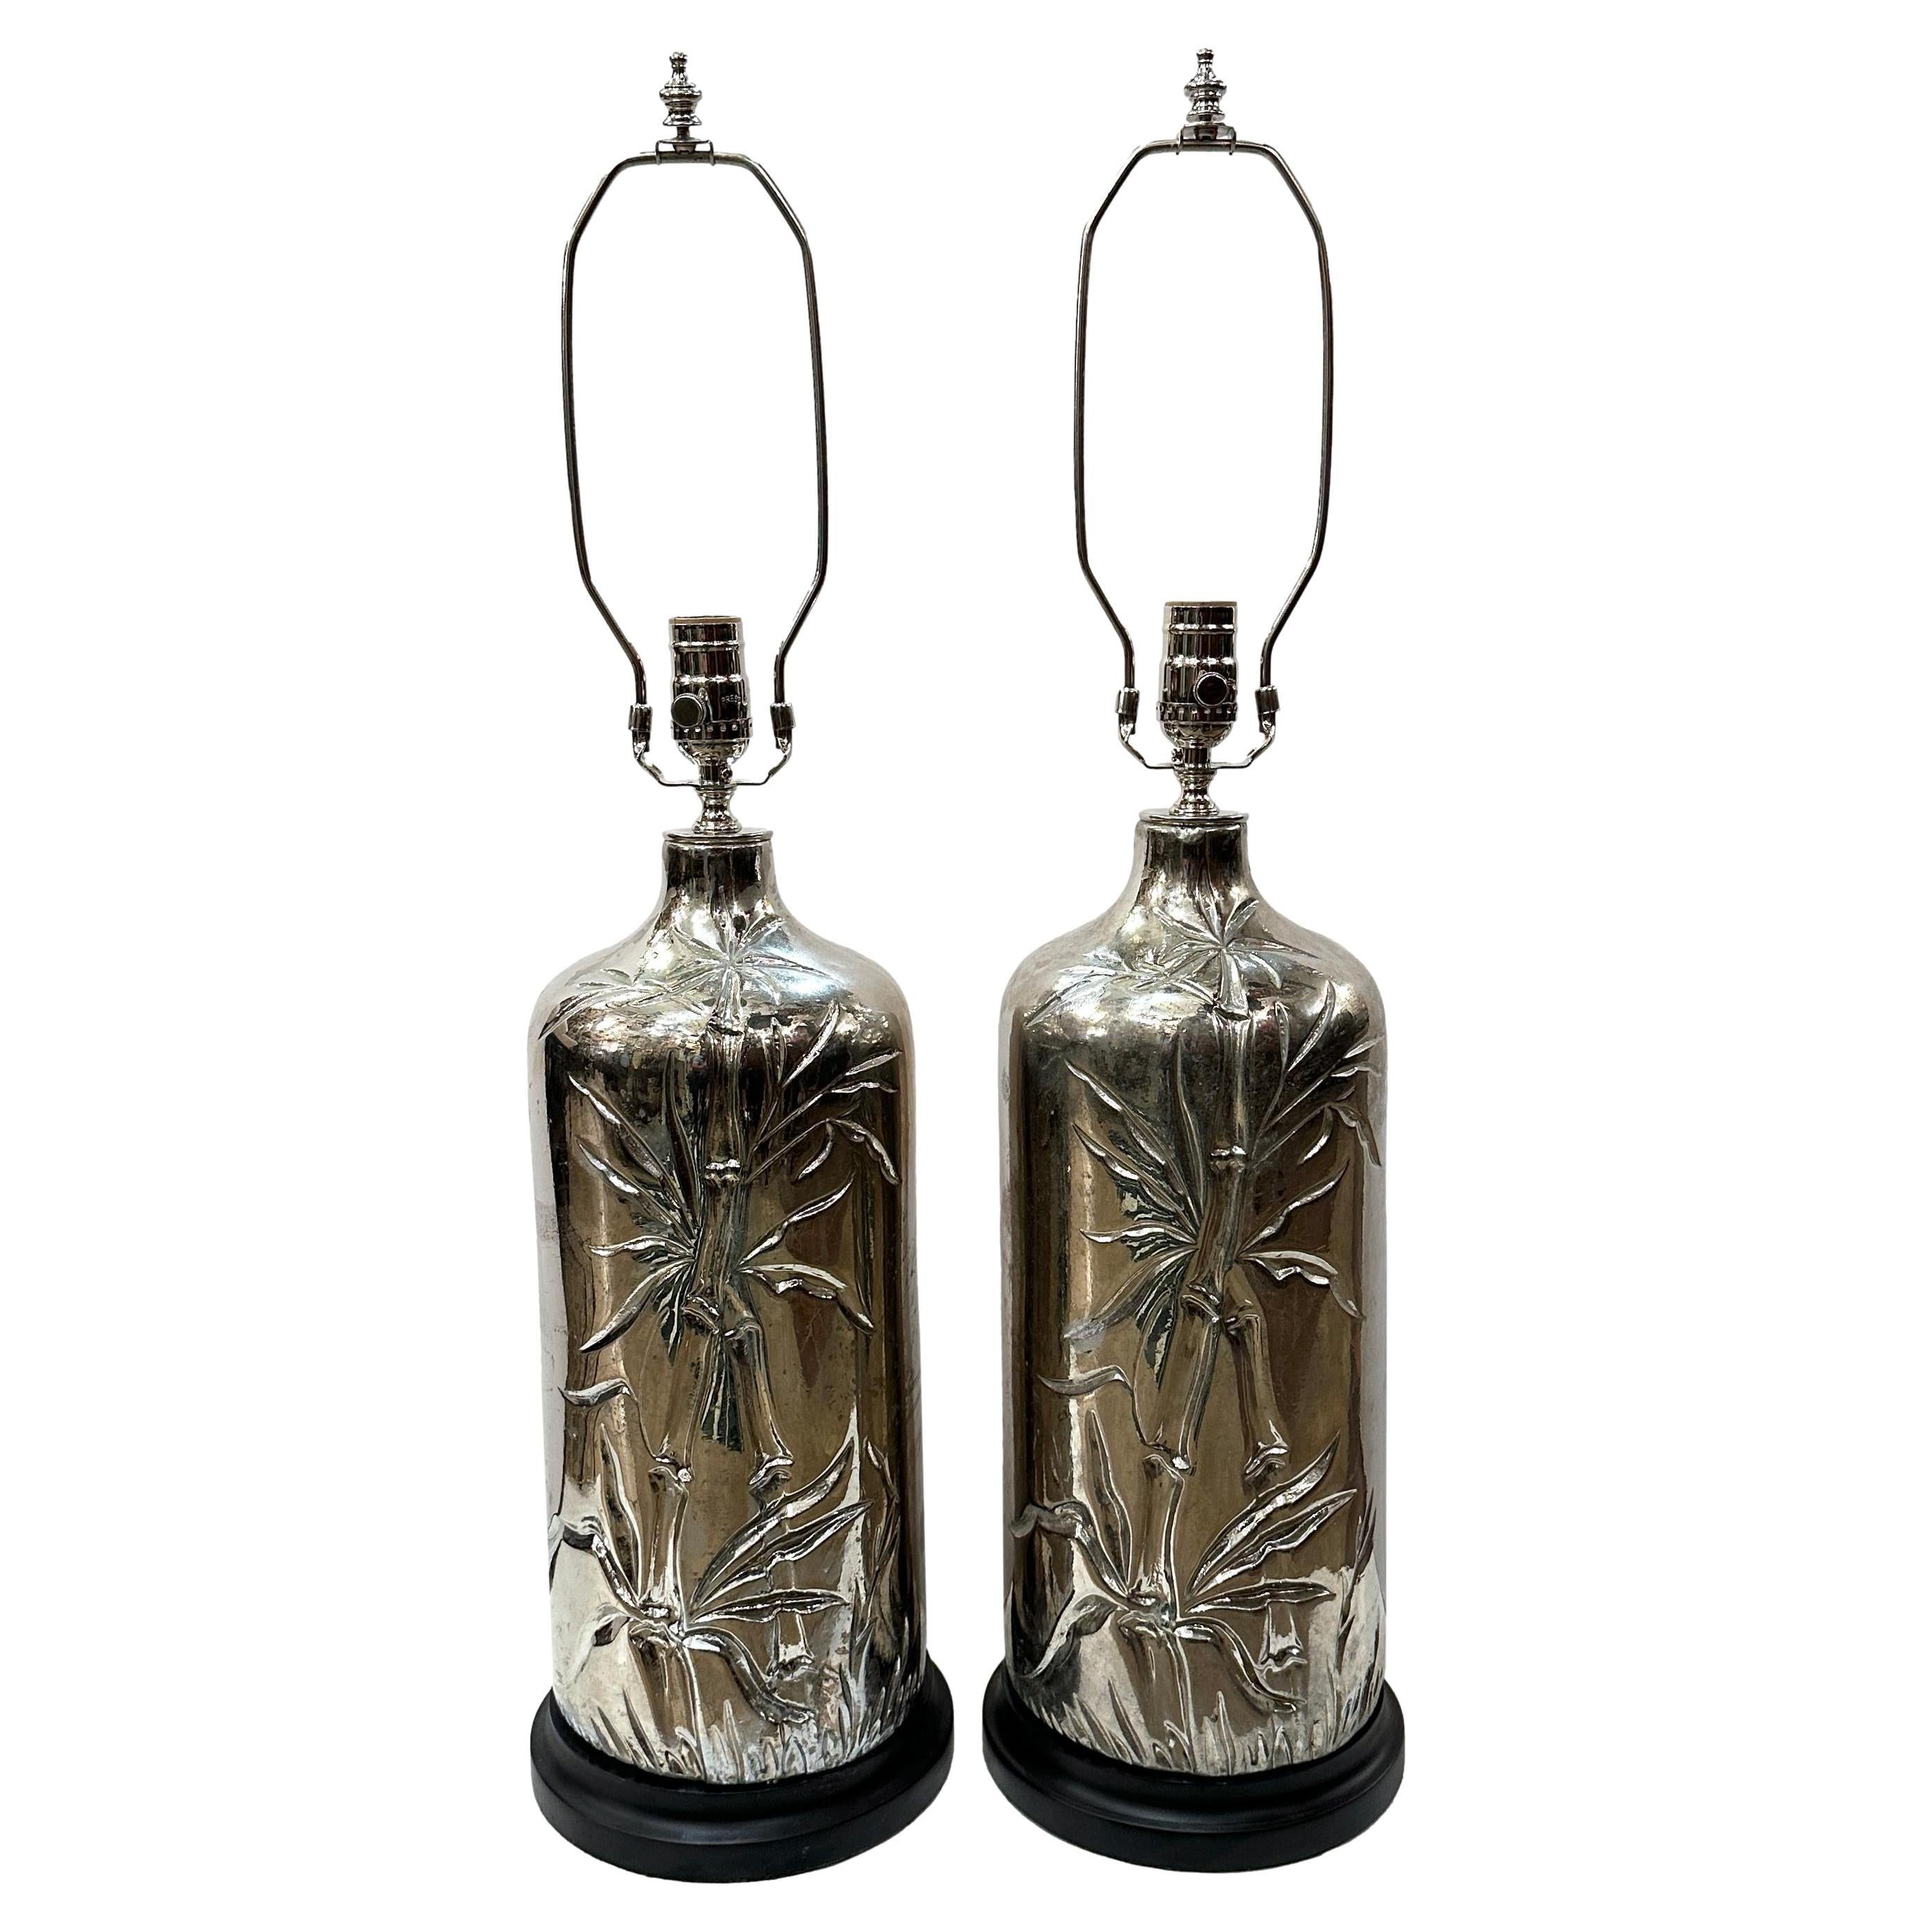 Pair of Midcentury Mercury Glass Lamps